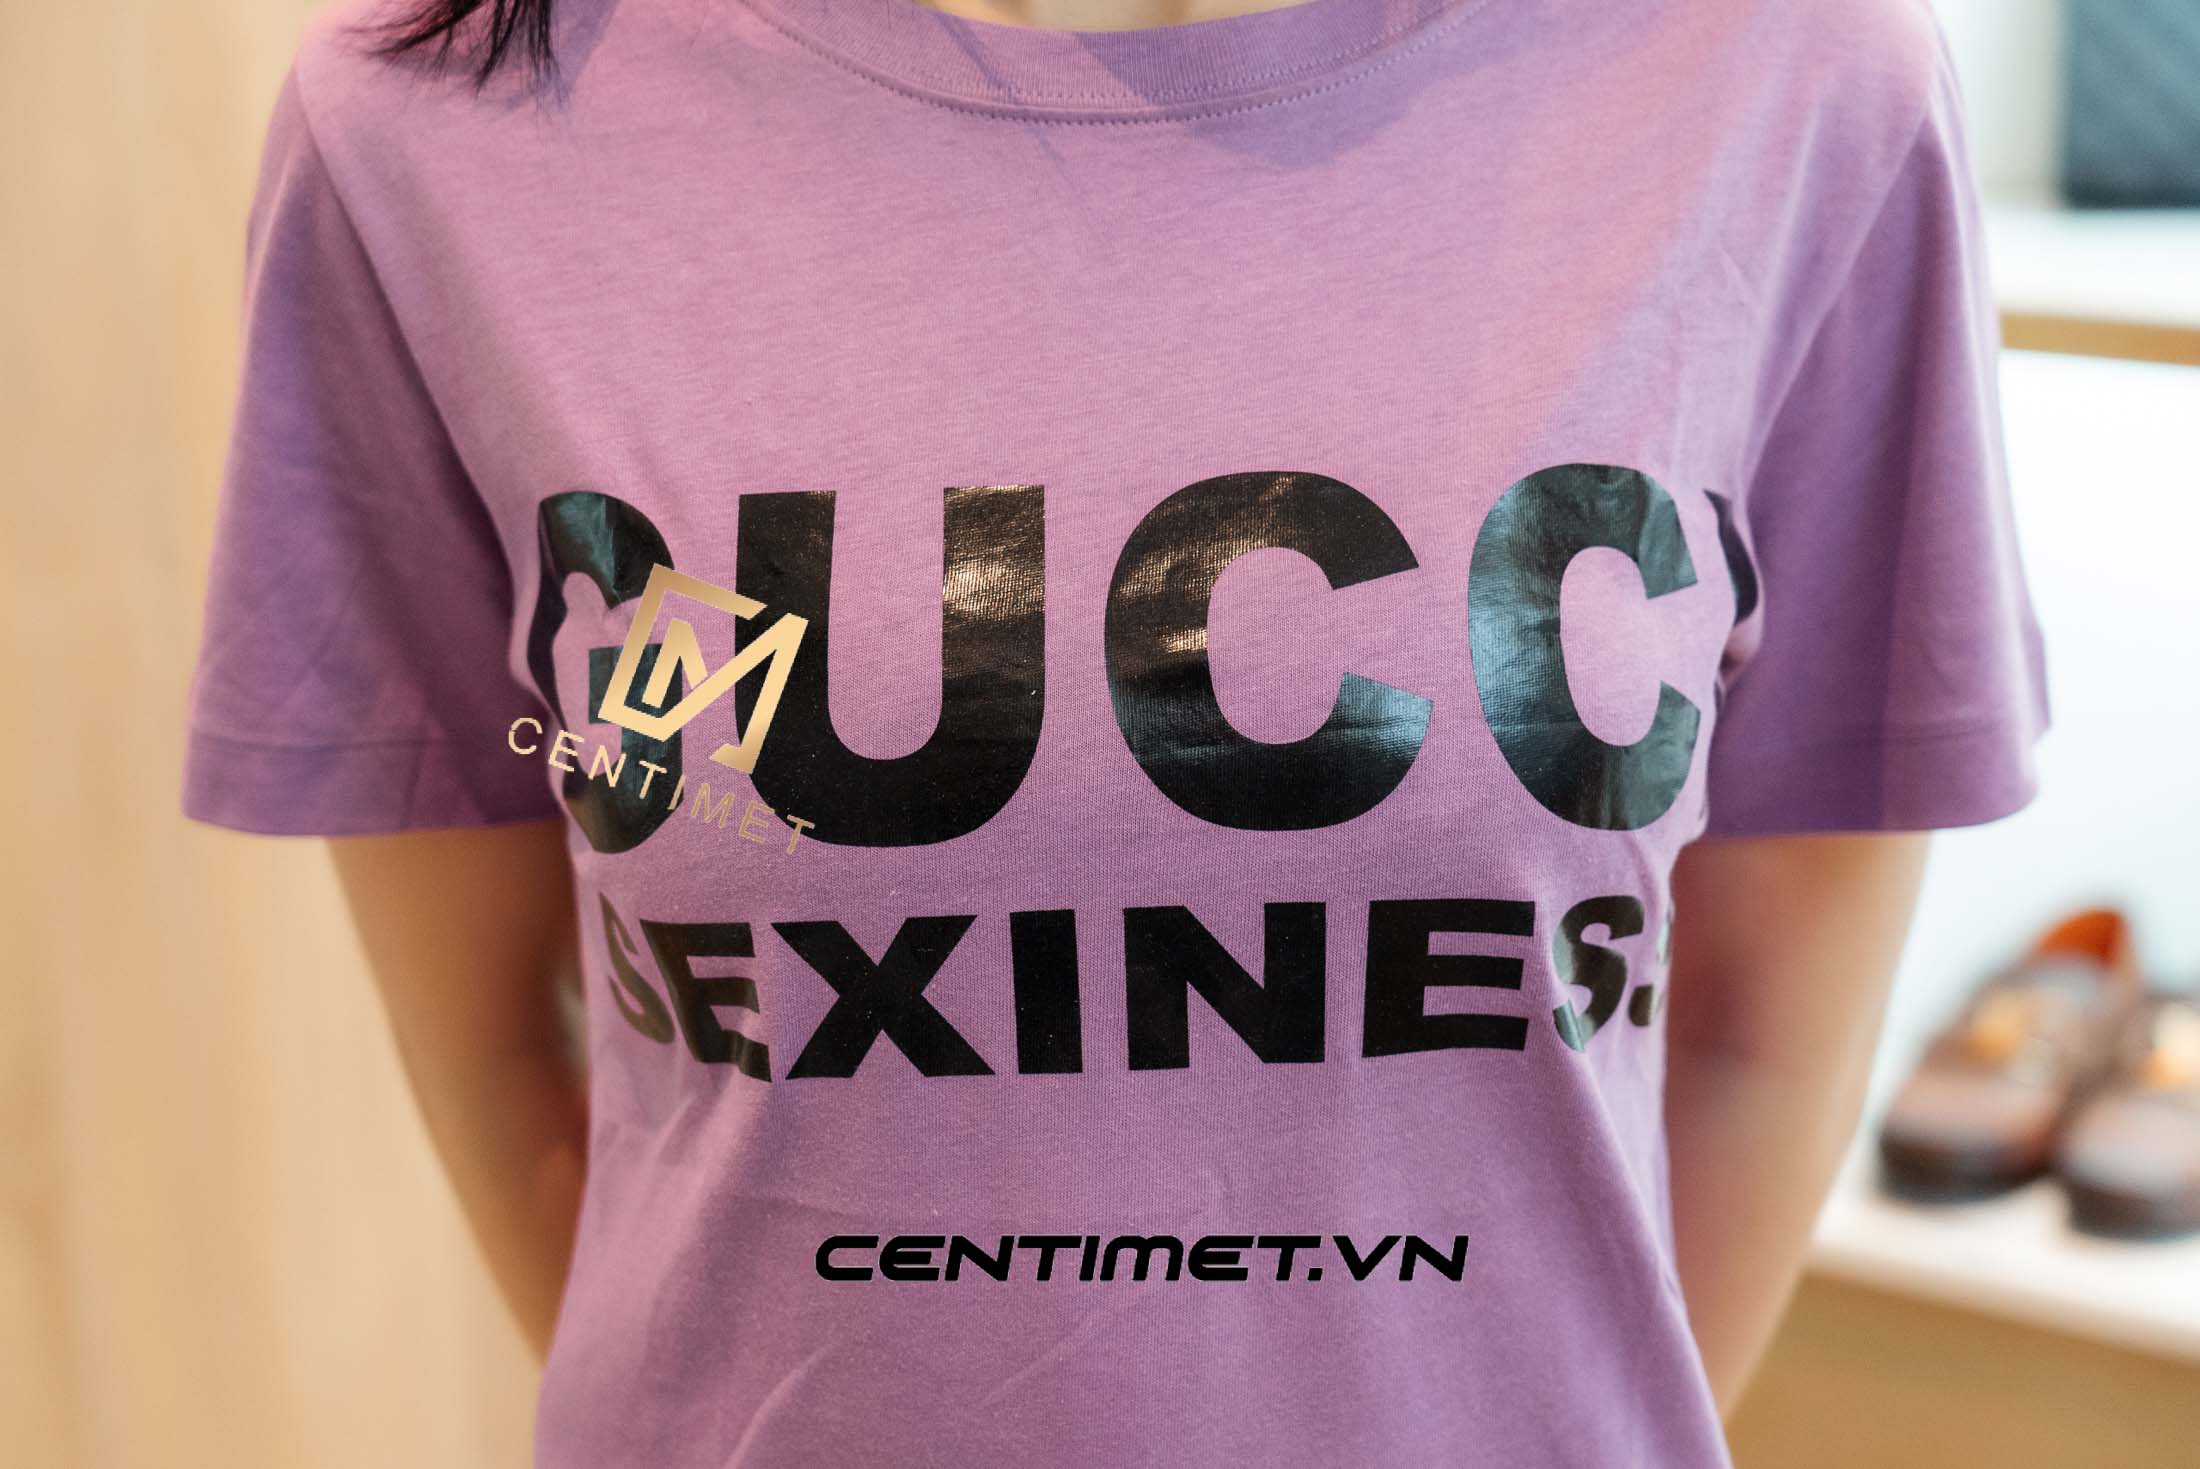 gucci-sexiness-slogan-t-shirt_15327829_26687337_2048